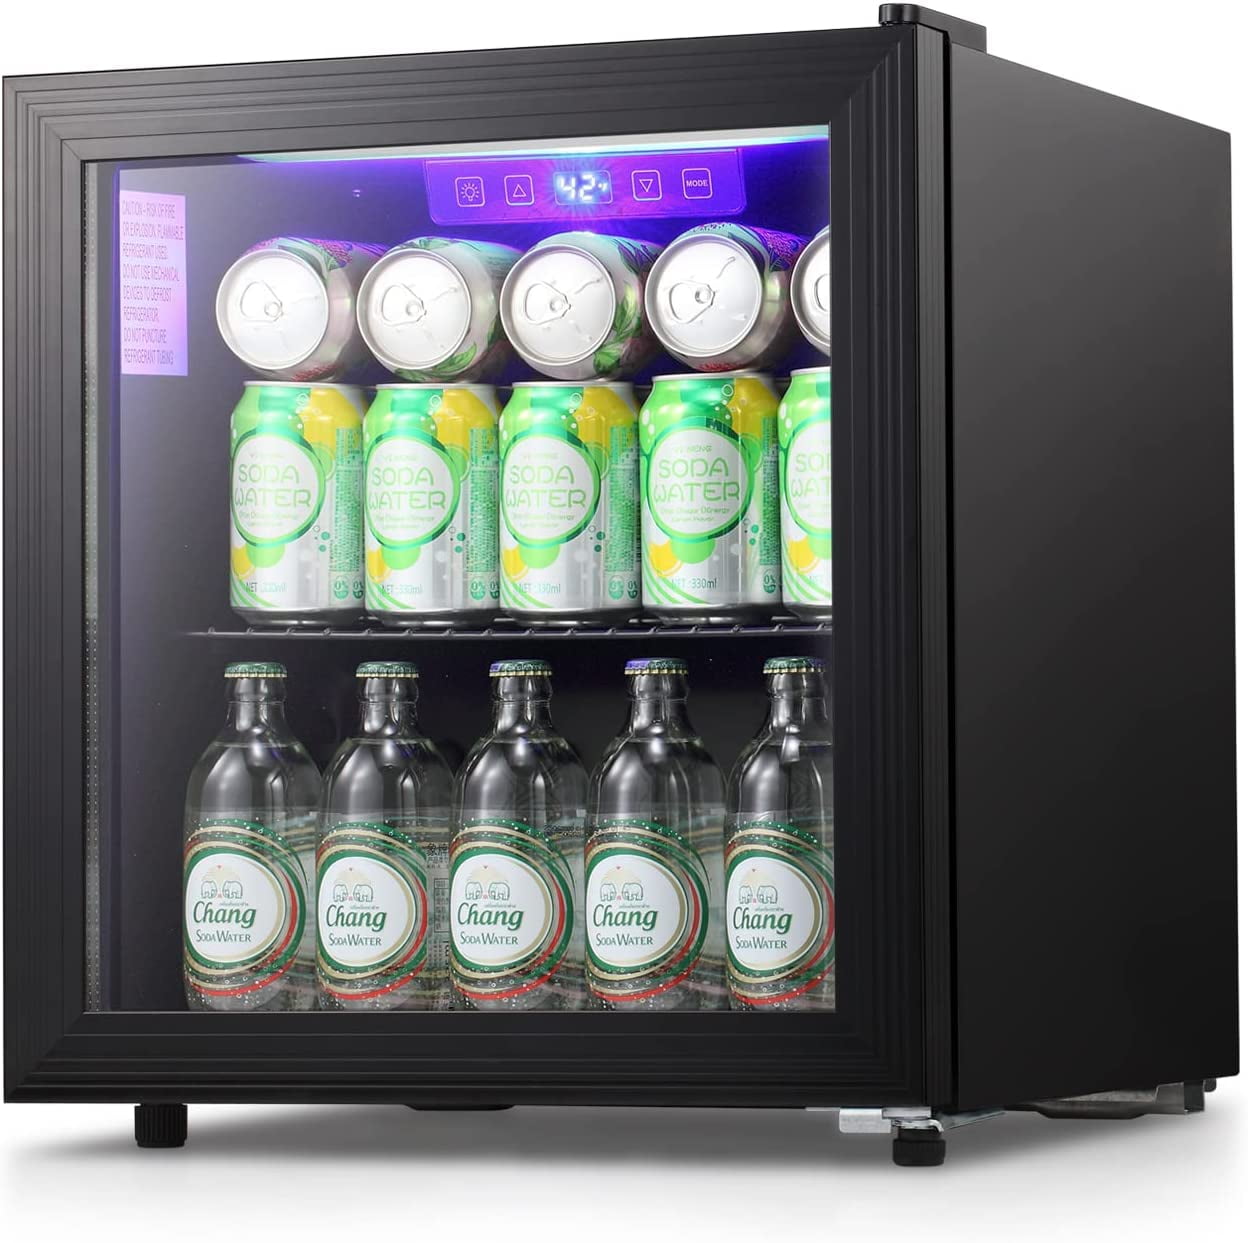 KISSAIR 1.7Cu.ft Beverage Refrigerator Cooler - Mini Fridge Soda or ...